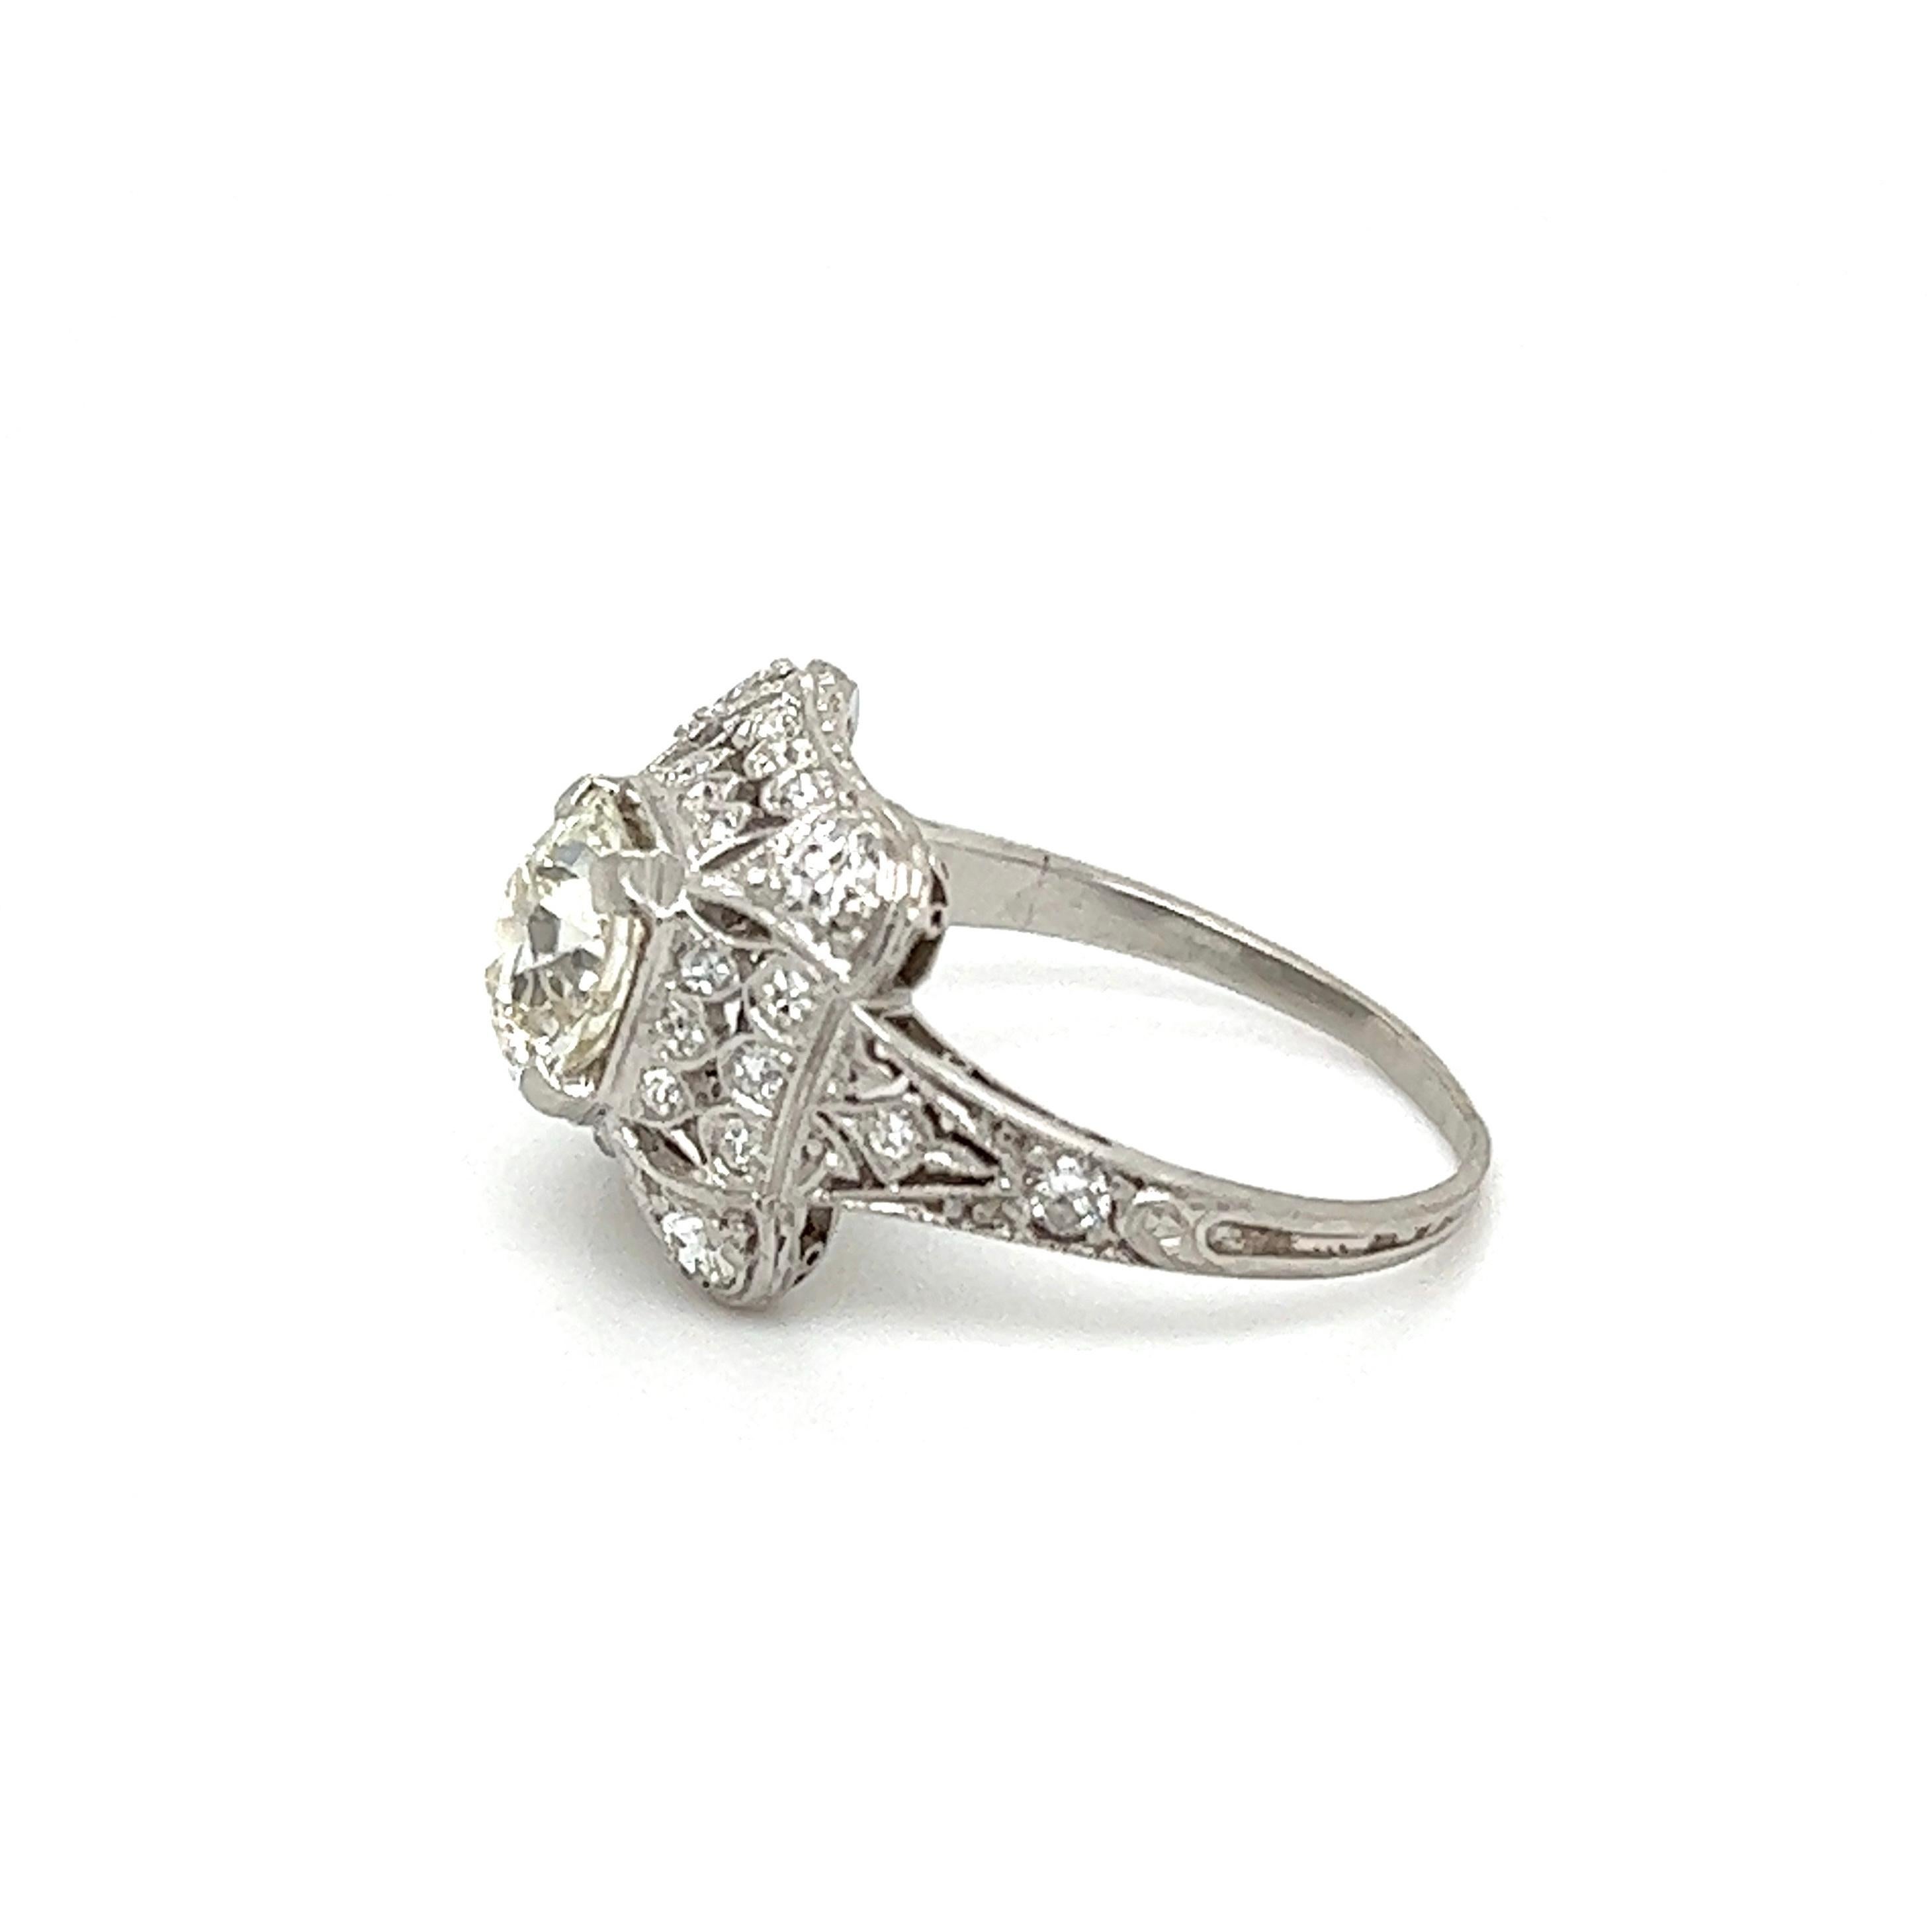 1.31 Carat Diamond Solitaire Art Deco Platinum Ring Estate Fine Jewelry For Sale 1